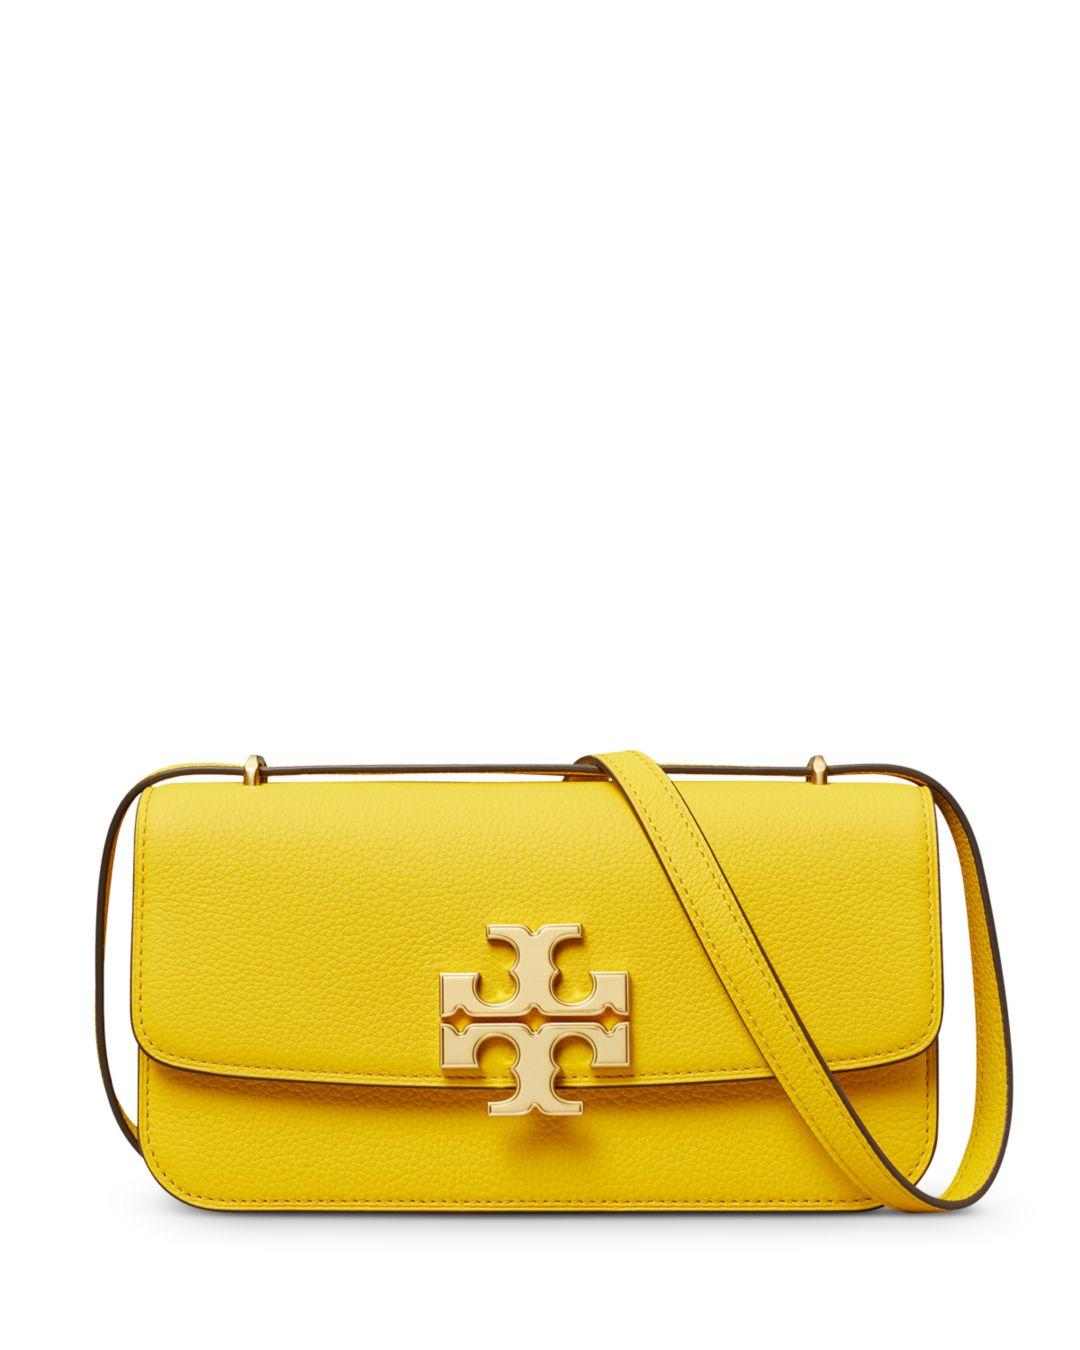 Tory Burch Small Eleanor Rectangular Bag in Yellow | Lyst